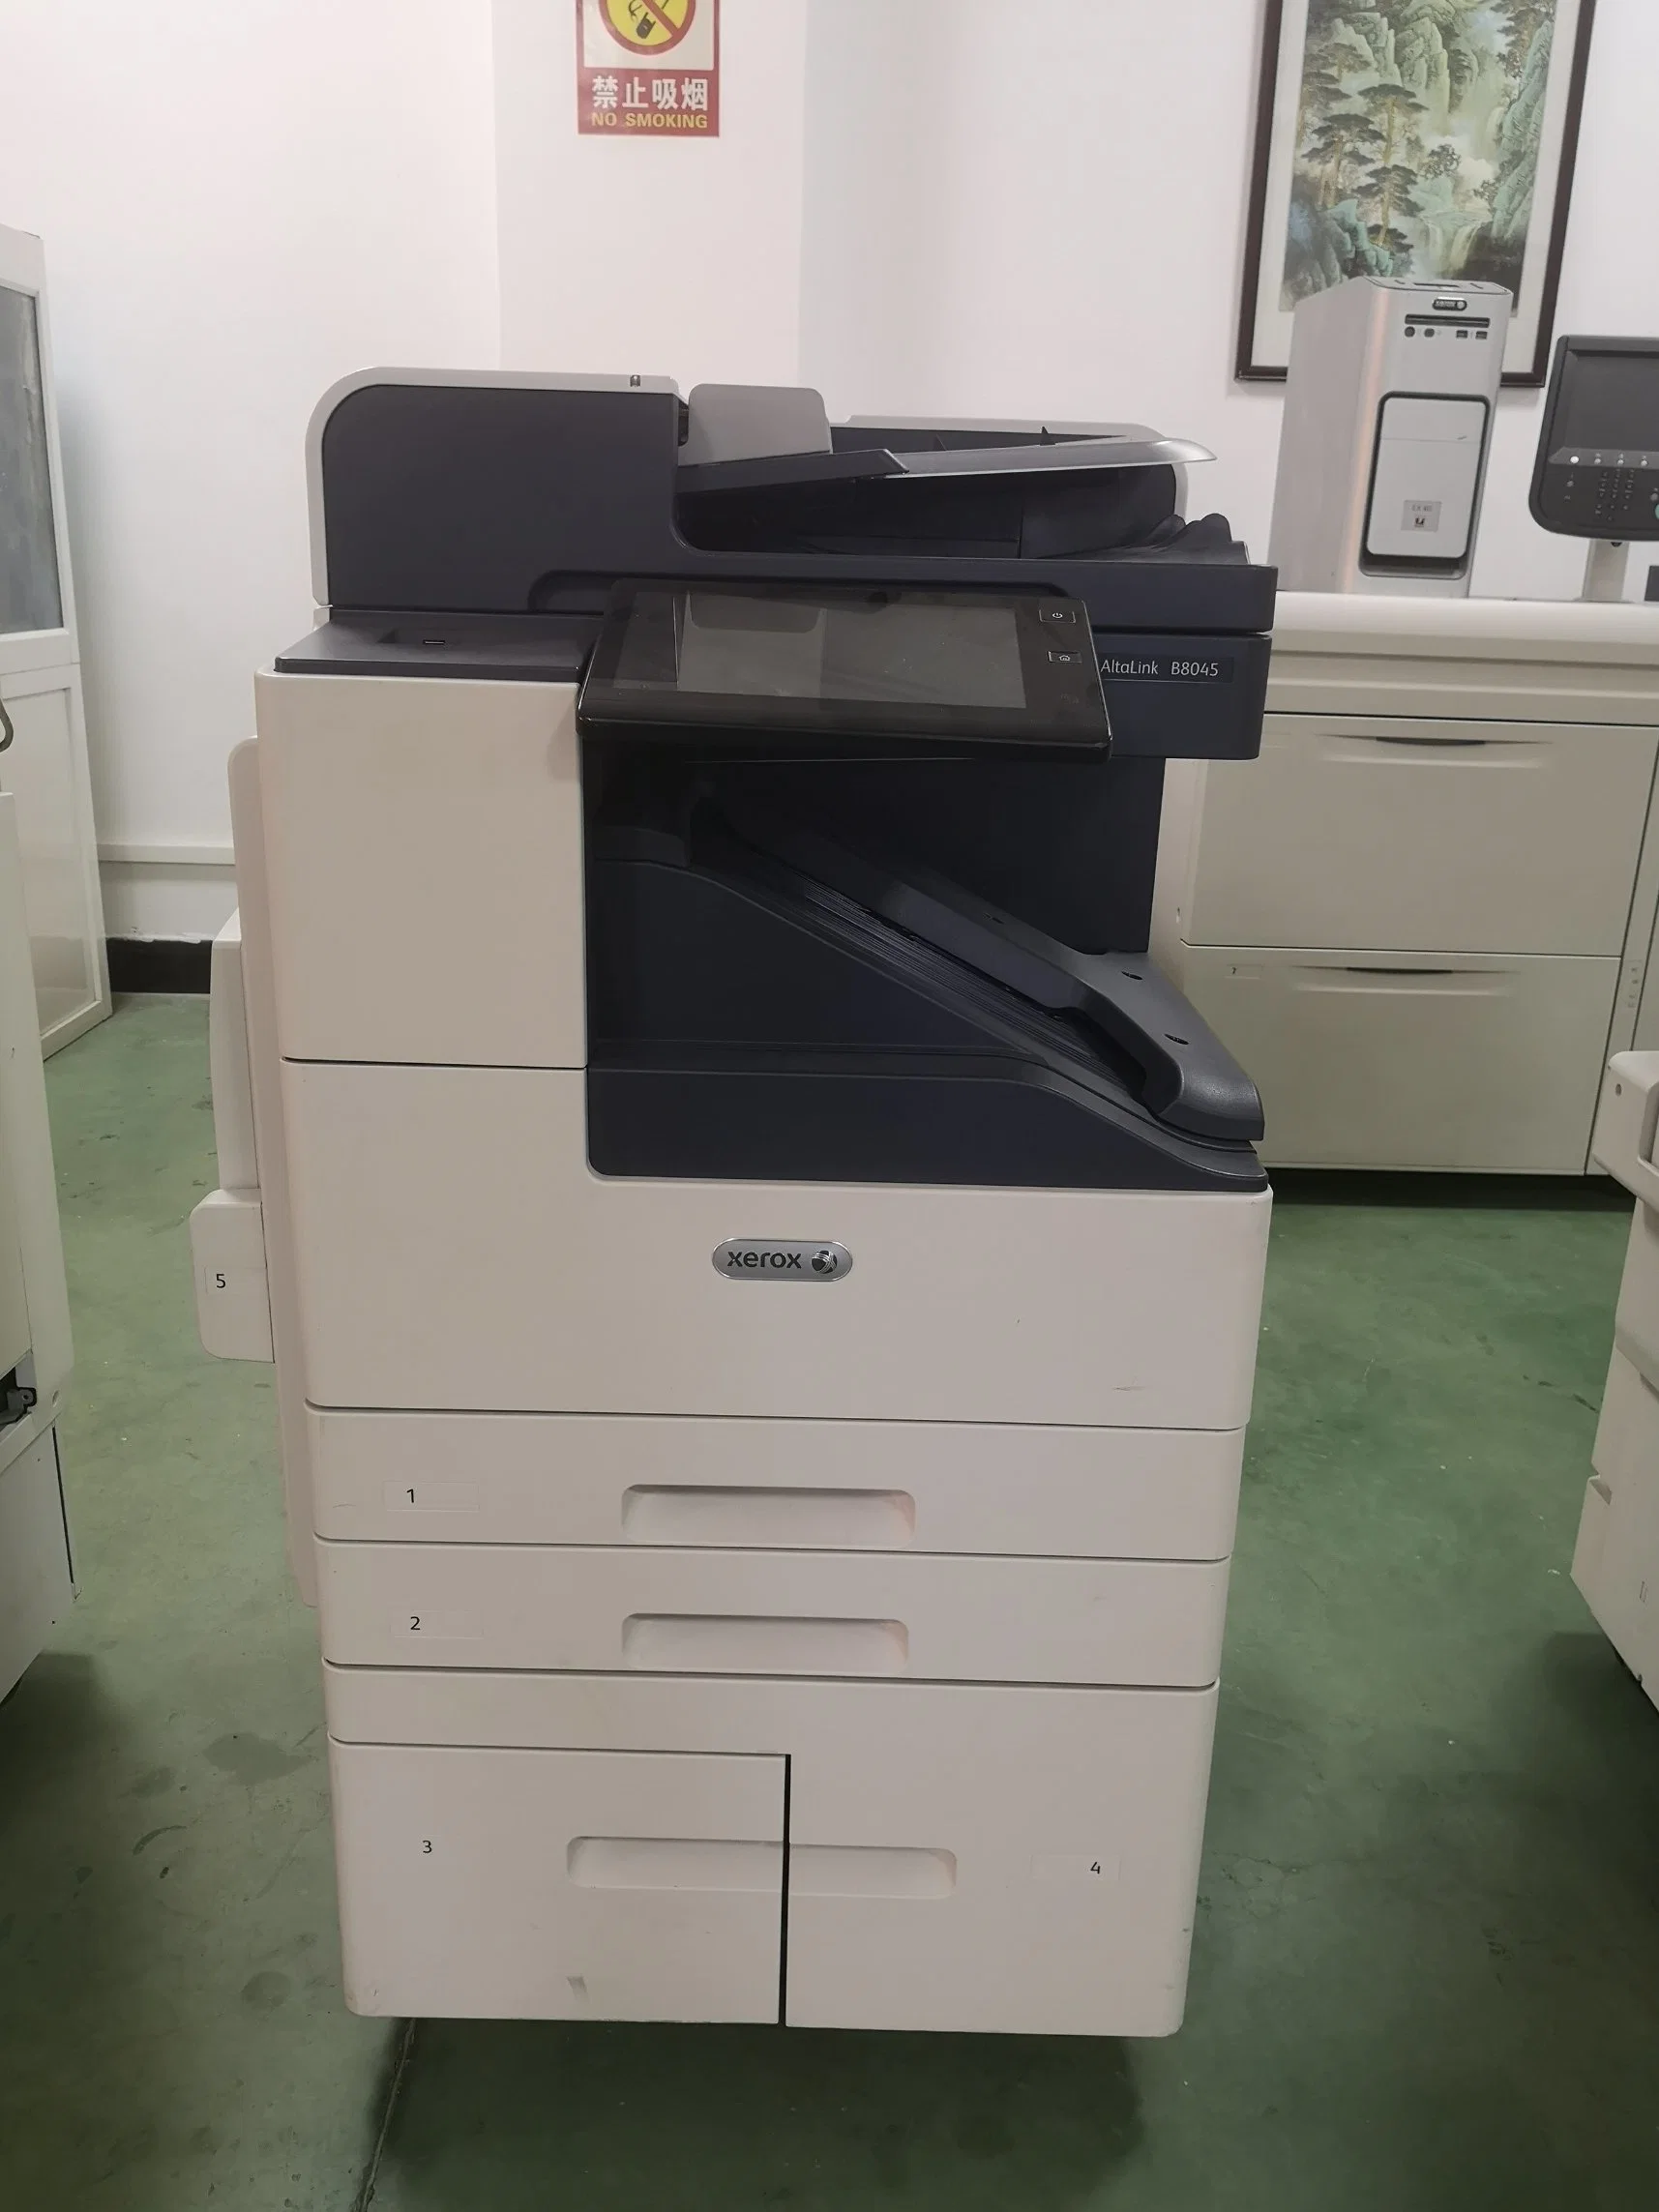 Tohita Multifunctional Color Printer A3 A4 Papierkopierer für Xerox Altalink Printer B8045 B8055 B8065 B8075 B8090 Farbmultifunktions-Drucker